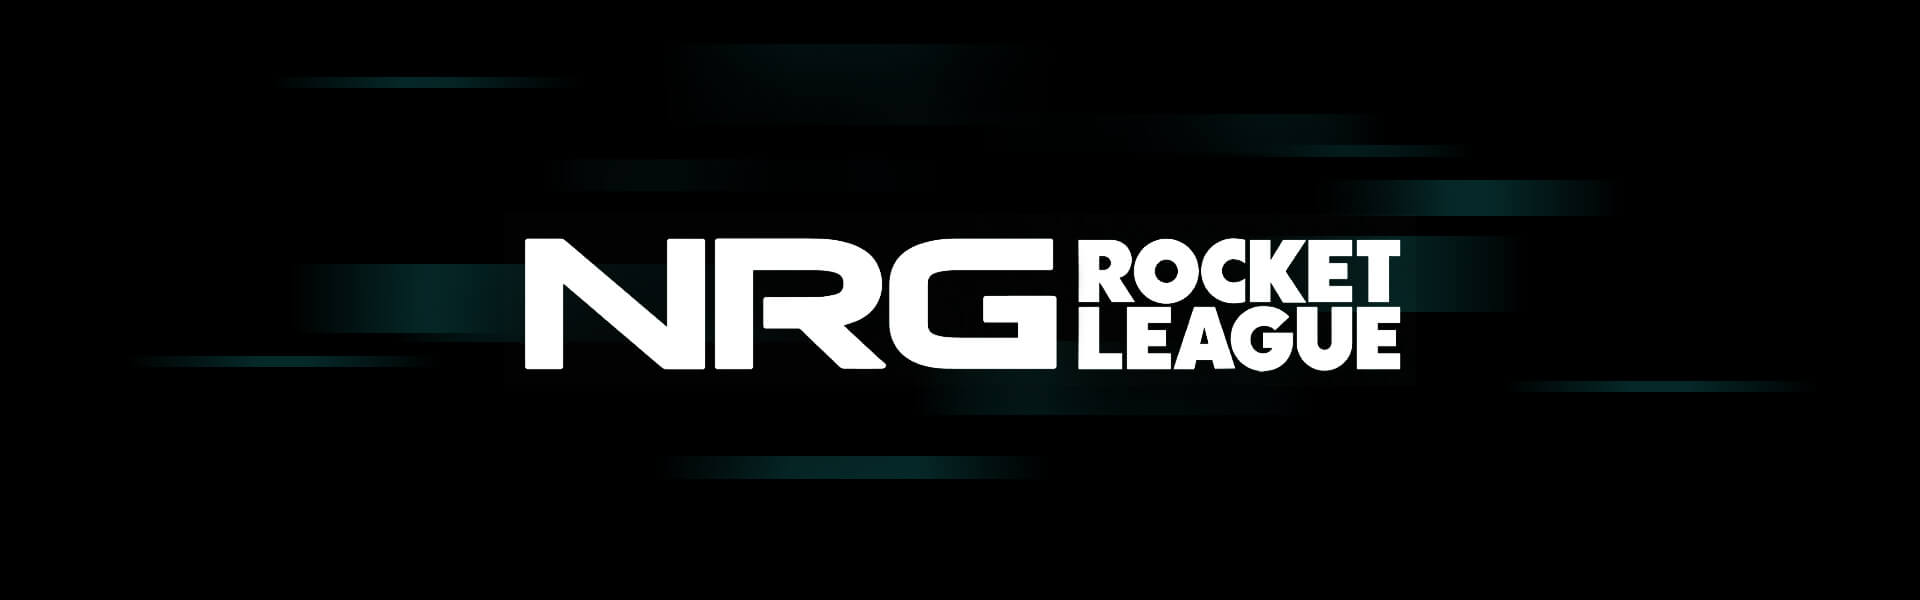 NRG Rocket League Team banner